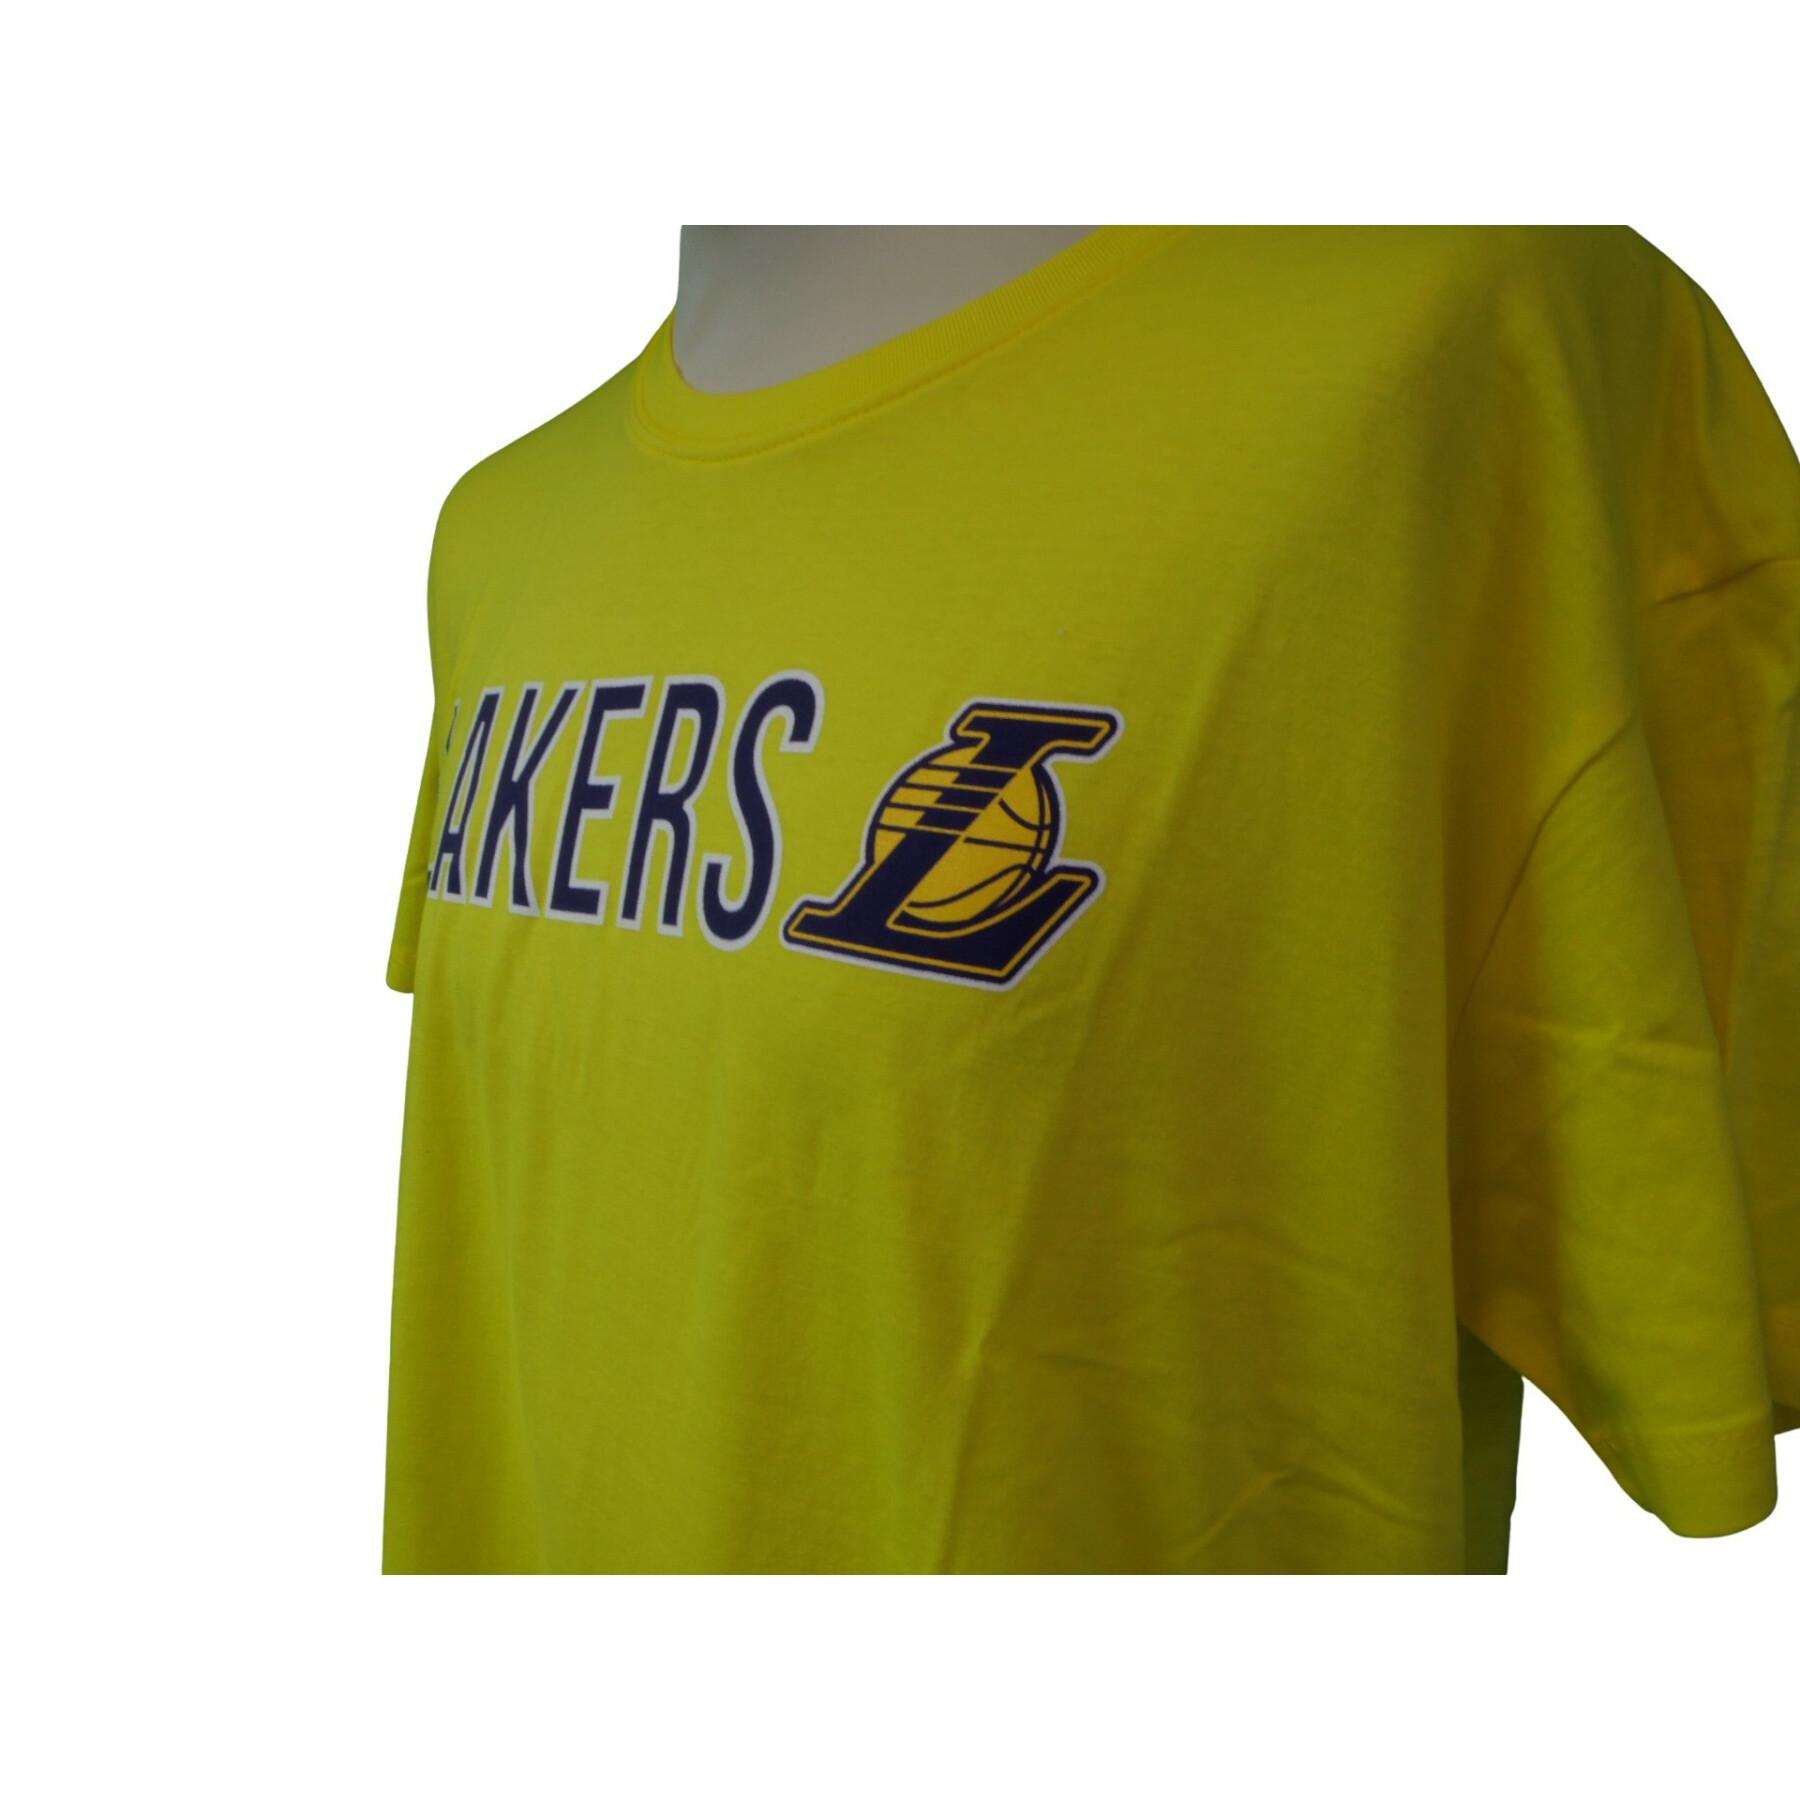 Camiseta Los Angeles Lakers